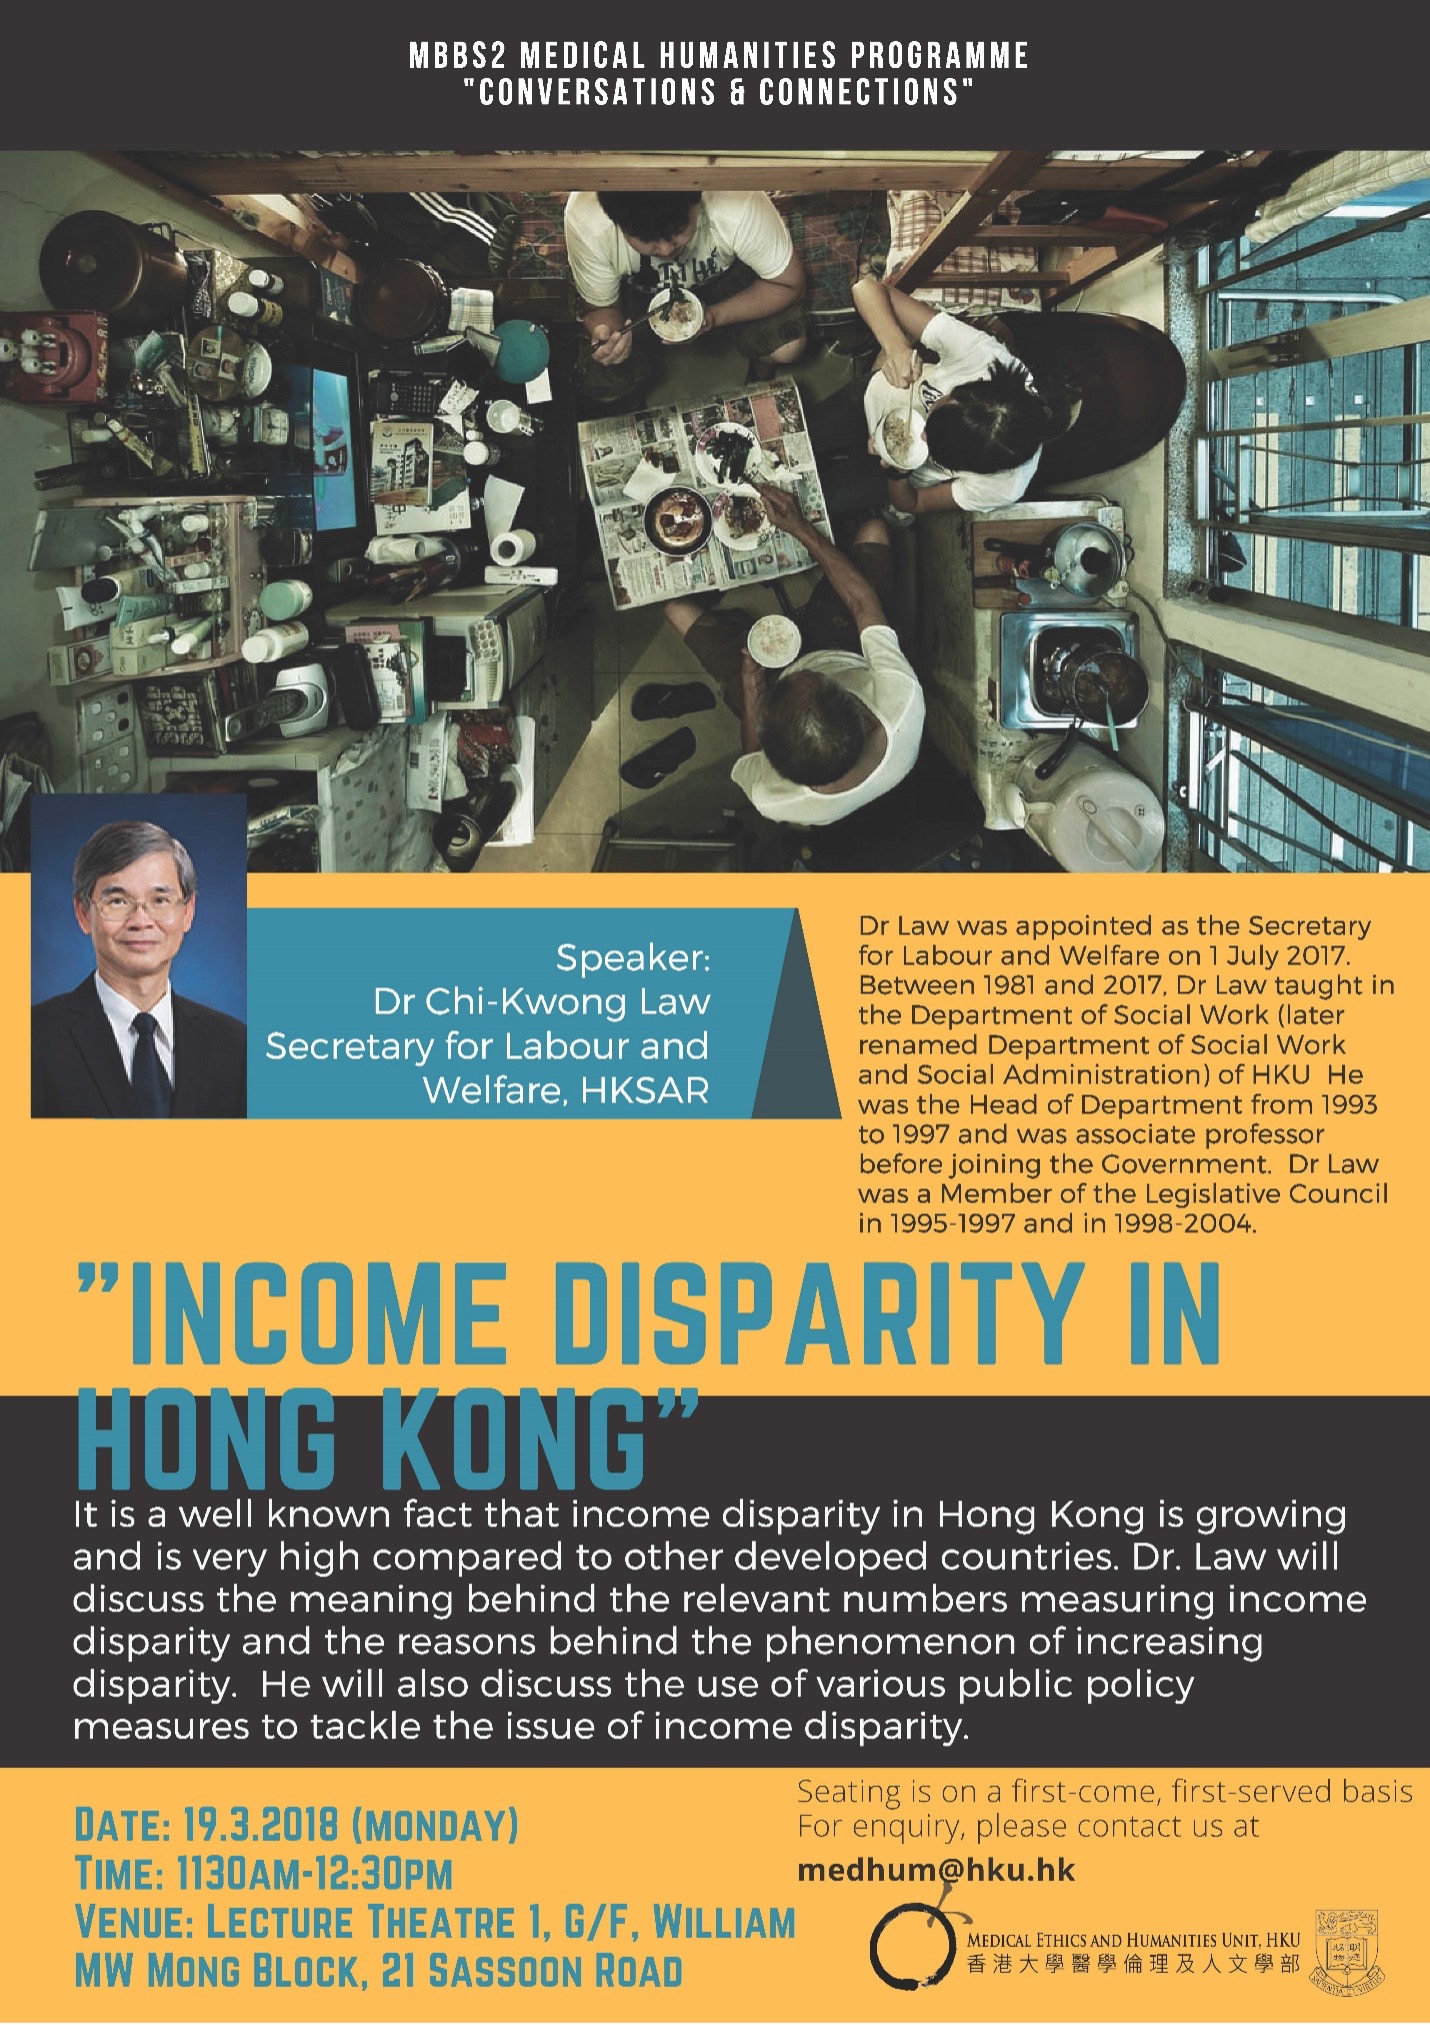 “Income Disparity In Hong Kong”